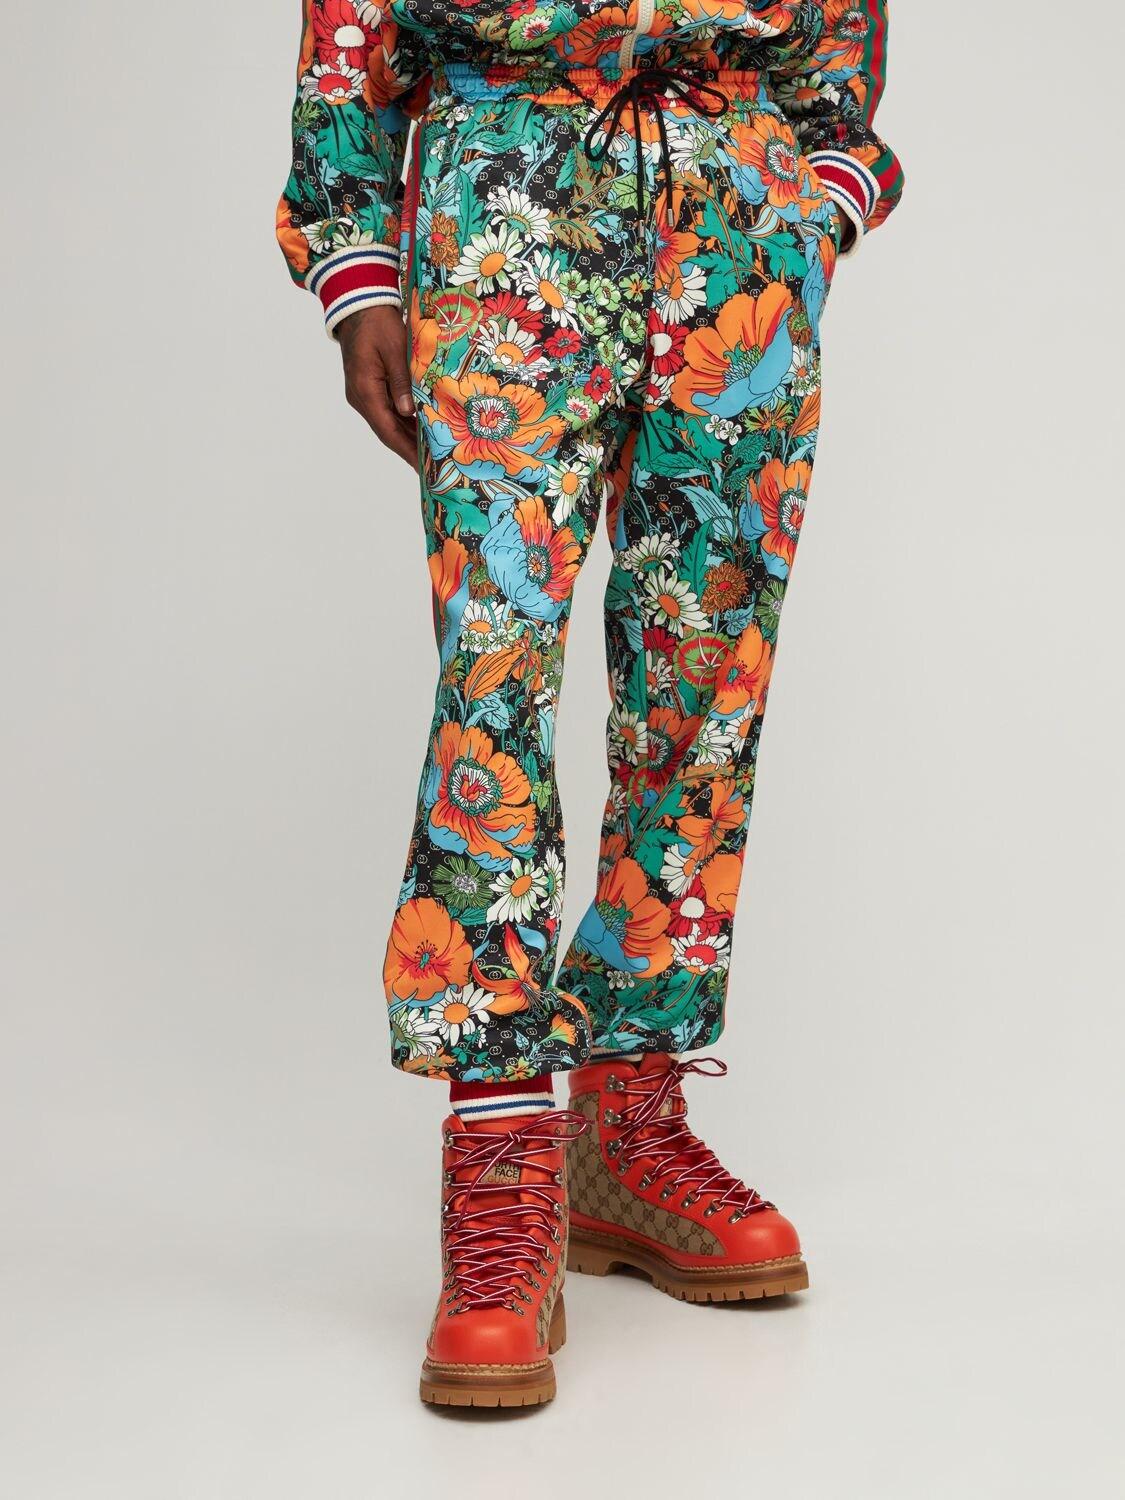 Gucci X The North Face Floral Print Jog Pants for Men - Lyst